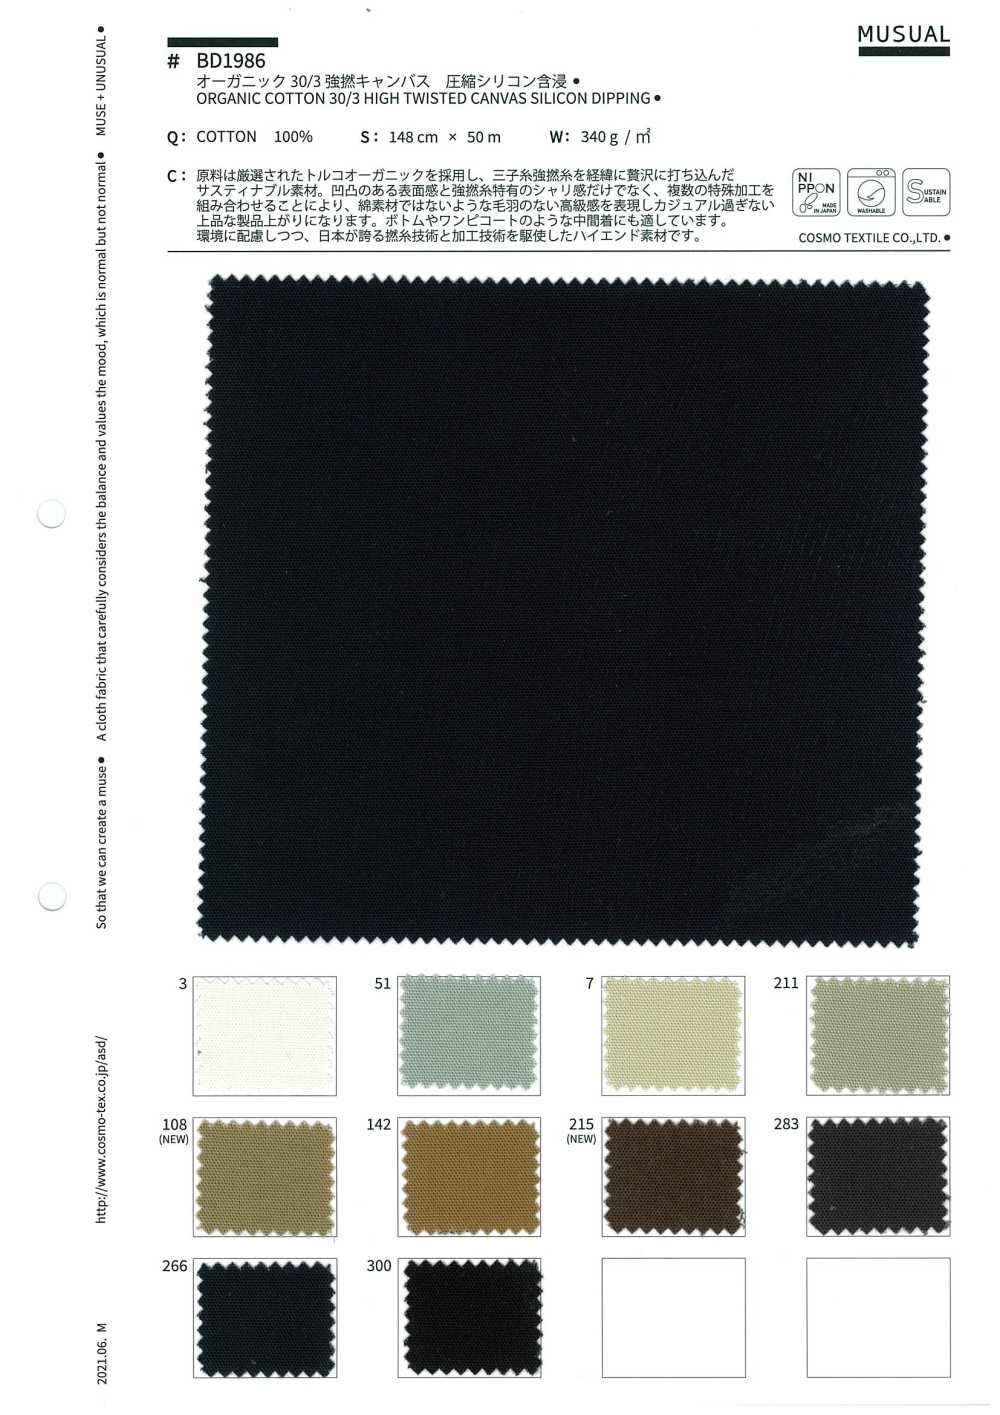 BD1986 30/3 High Twist Organic Cotton Canvas Mit Komprimiertem Silikon[Textilgewebe] COSMO TEXTILE